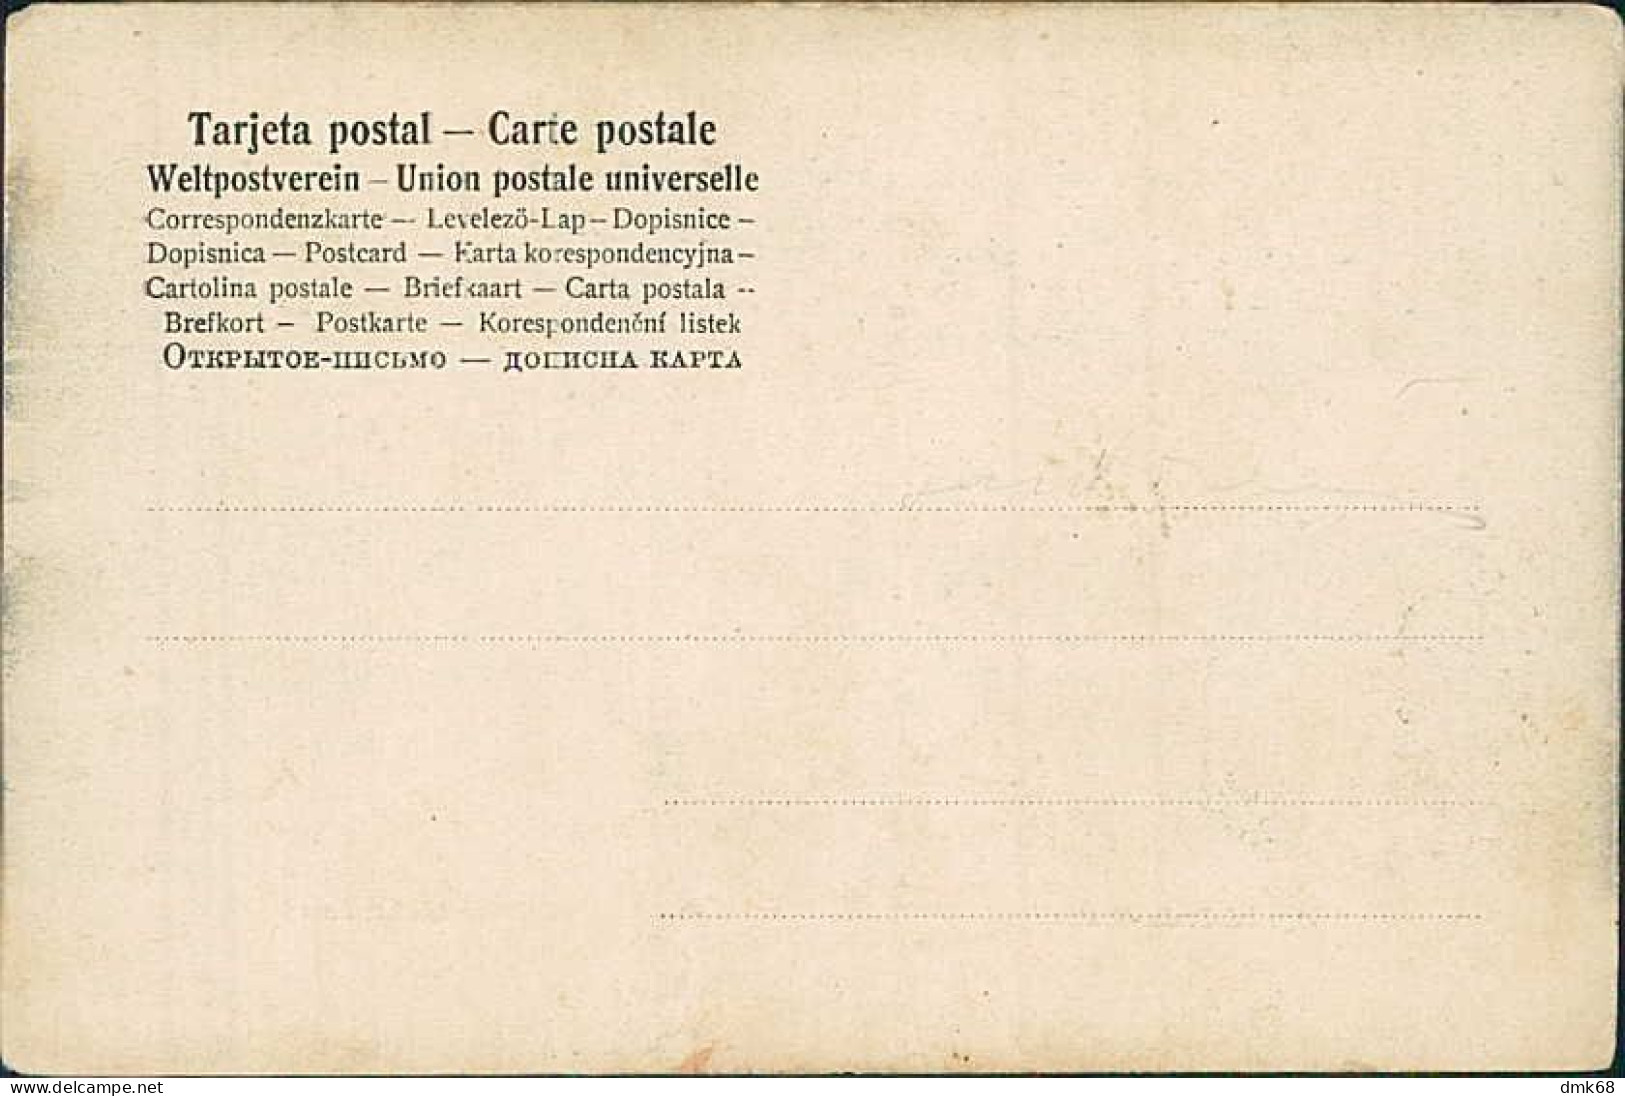 URUGUAY - MONTEVIDEO - LAGO DEL PRADO - EDIT. HNOS - 1900s / STAMP (17682) - Uruguay